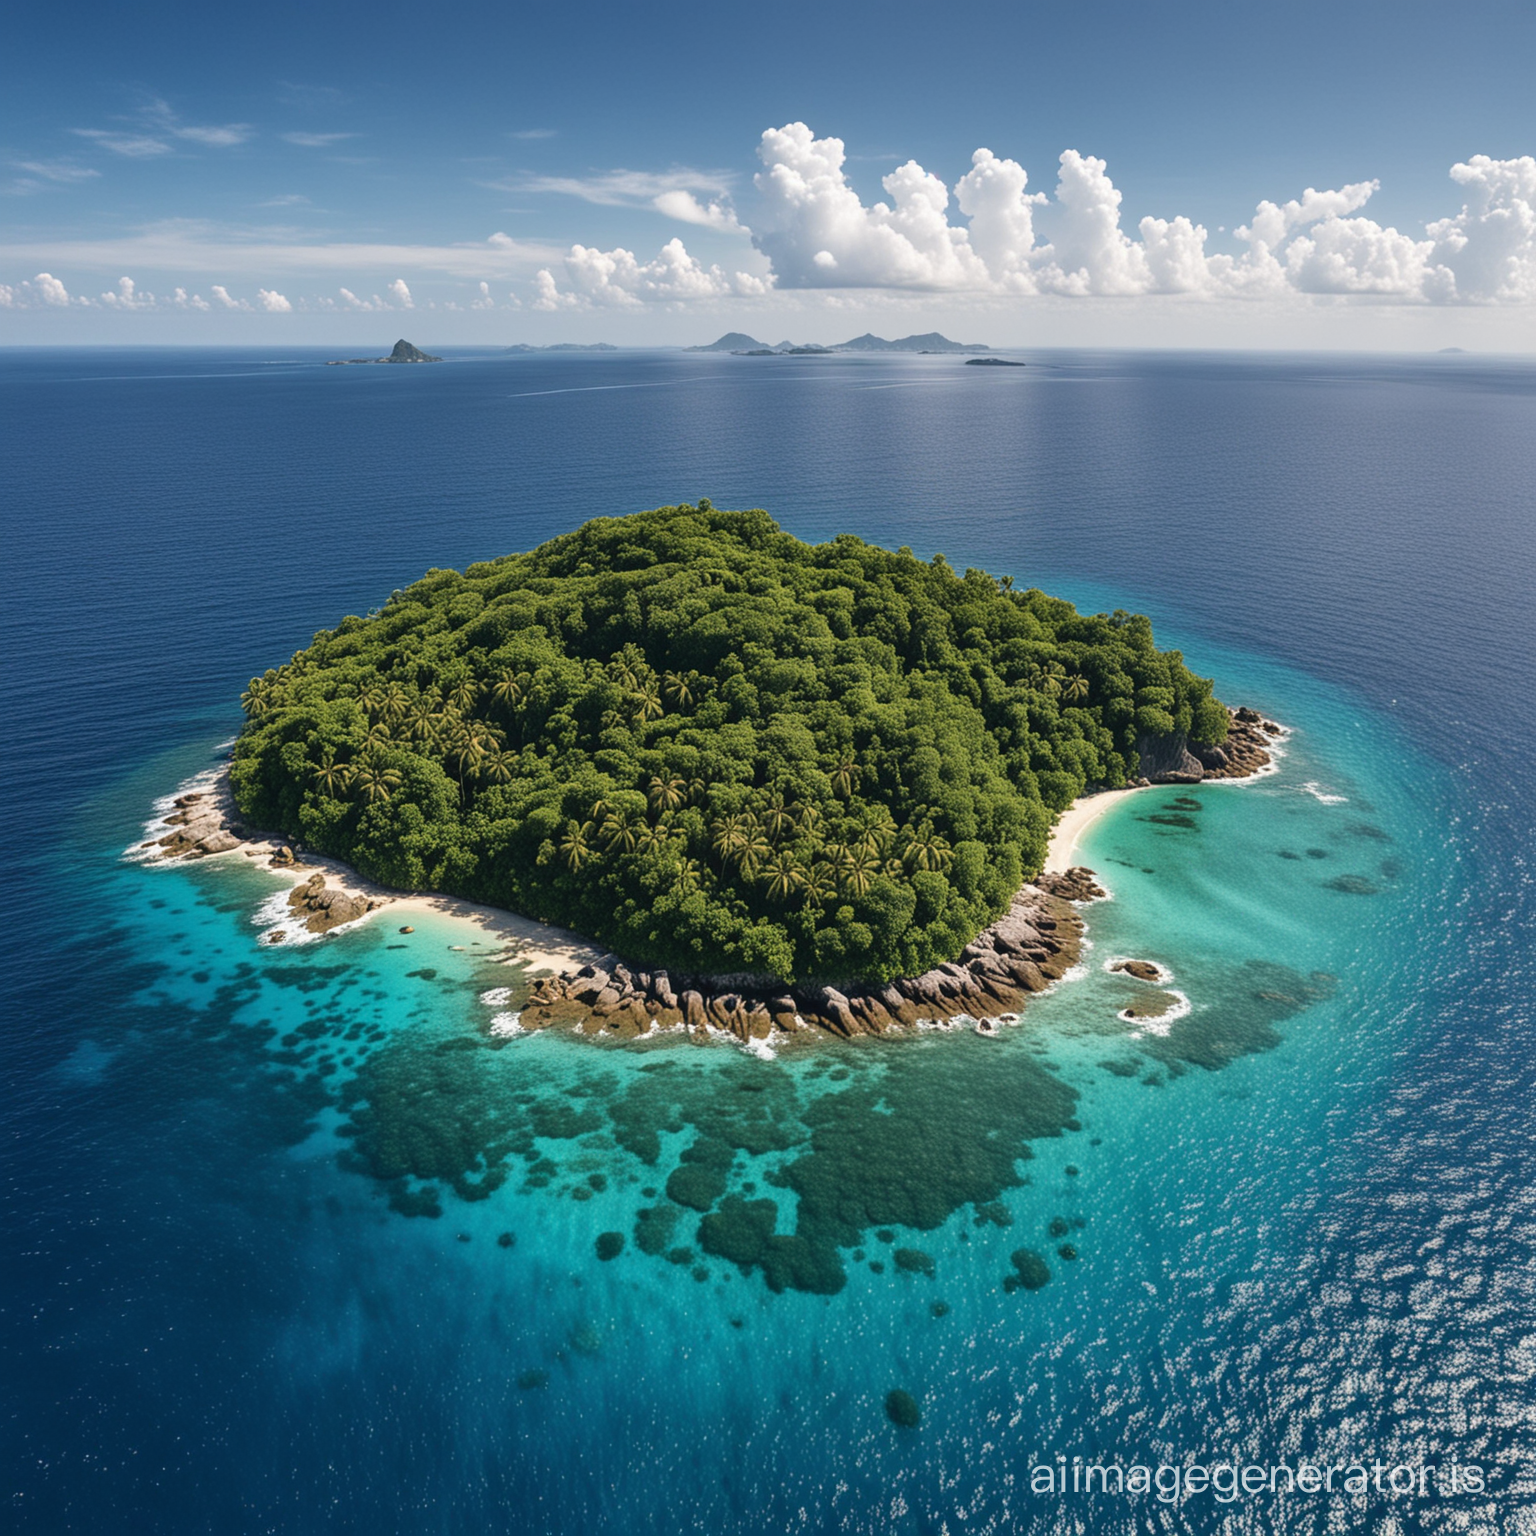 A very beautiful island near blue sea (nature view)